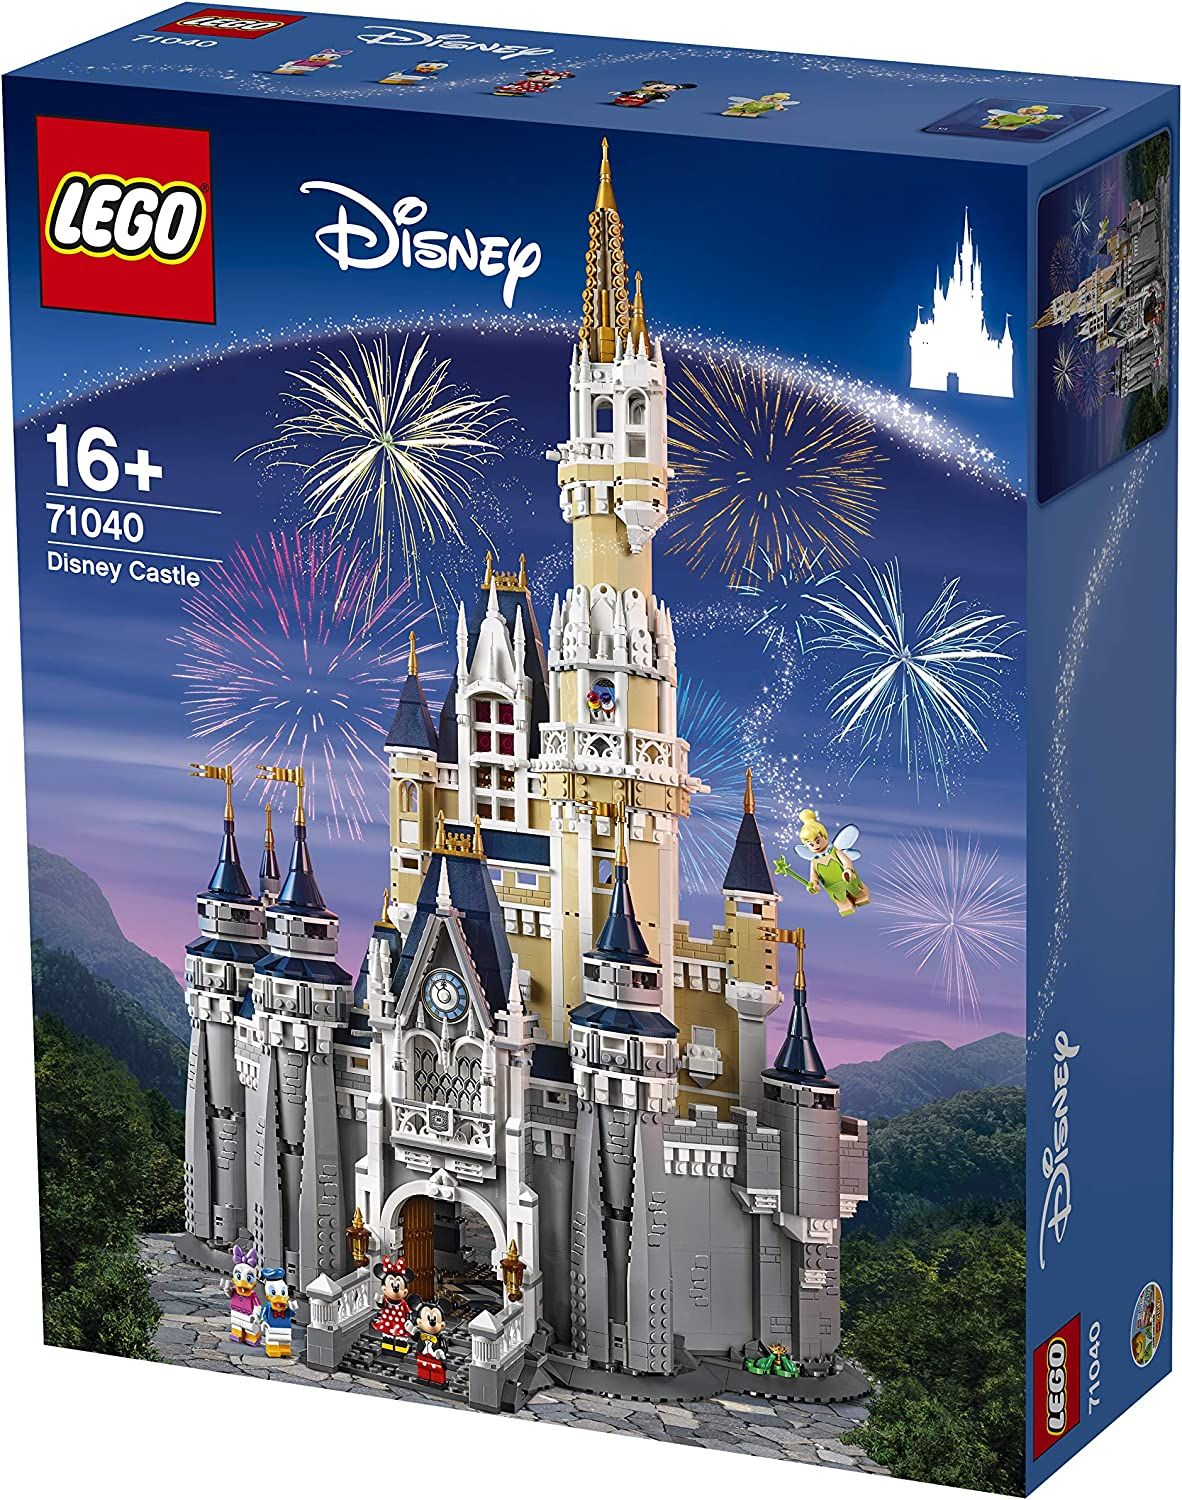 LEGO Disney Castle box